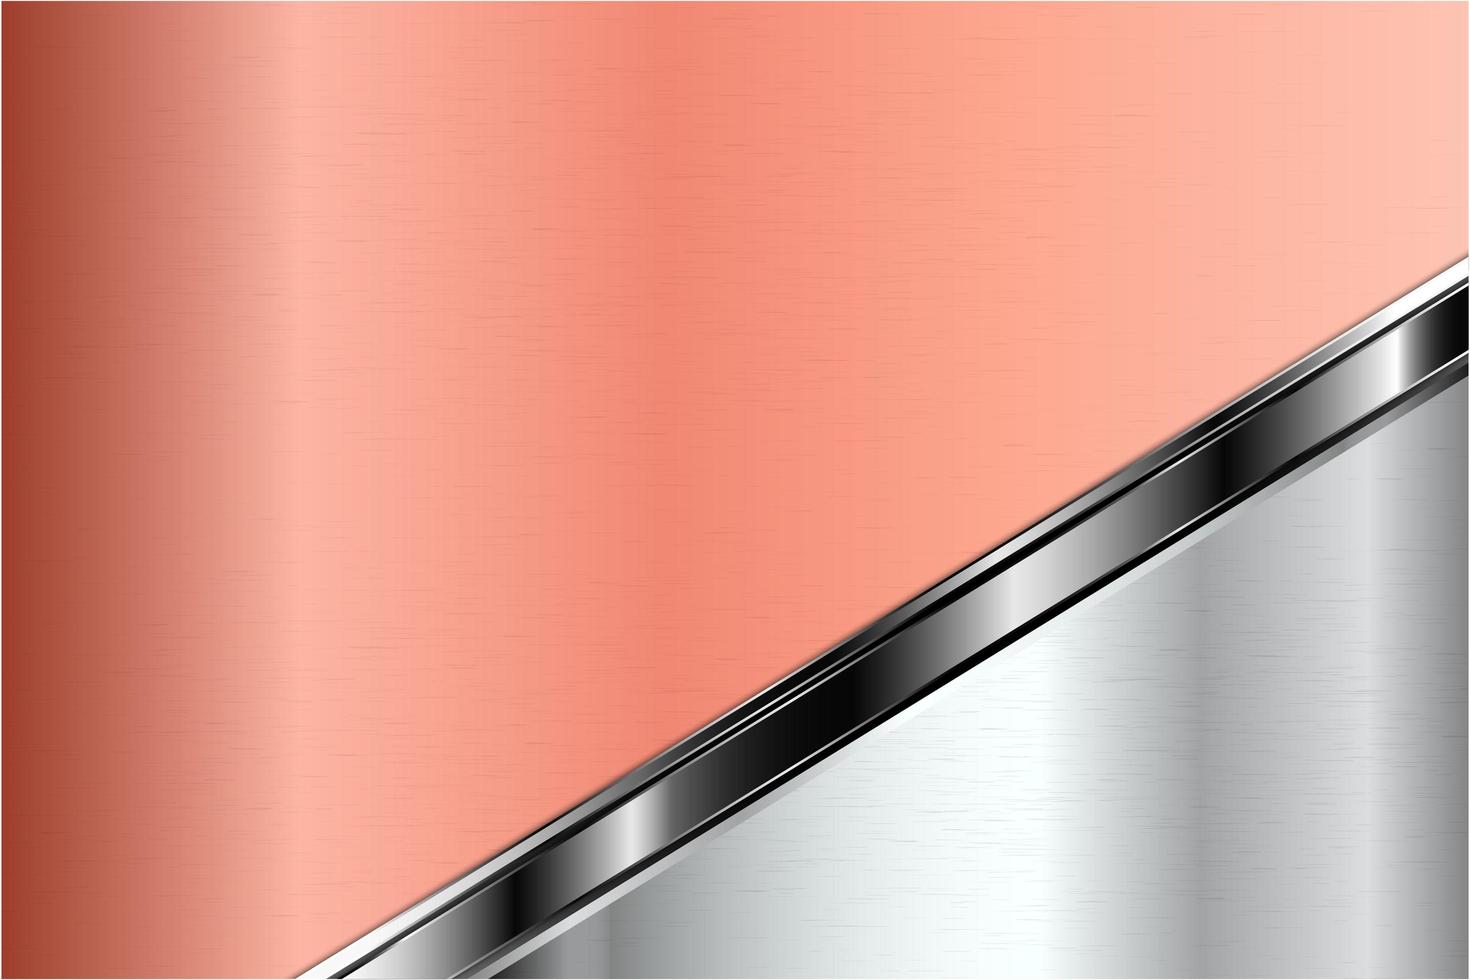 moderno sfondo metallico rosa e argento vettore